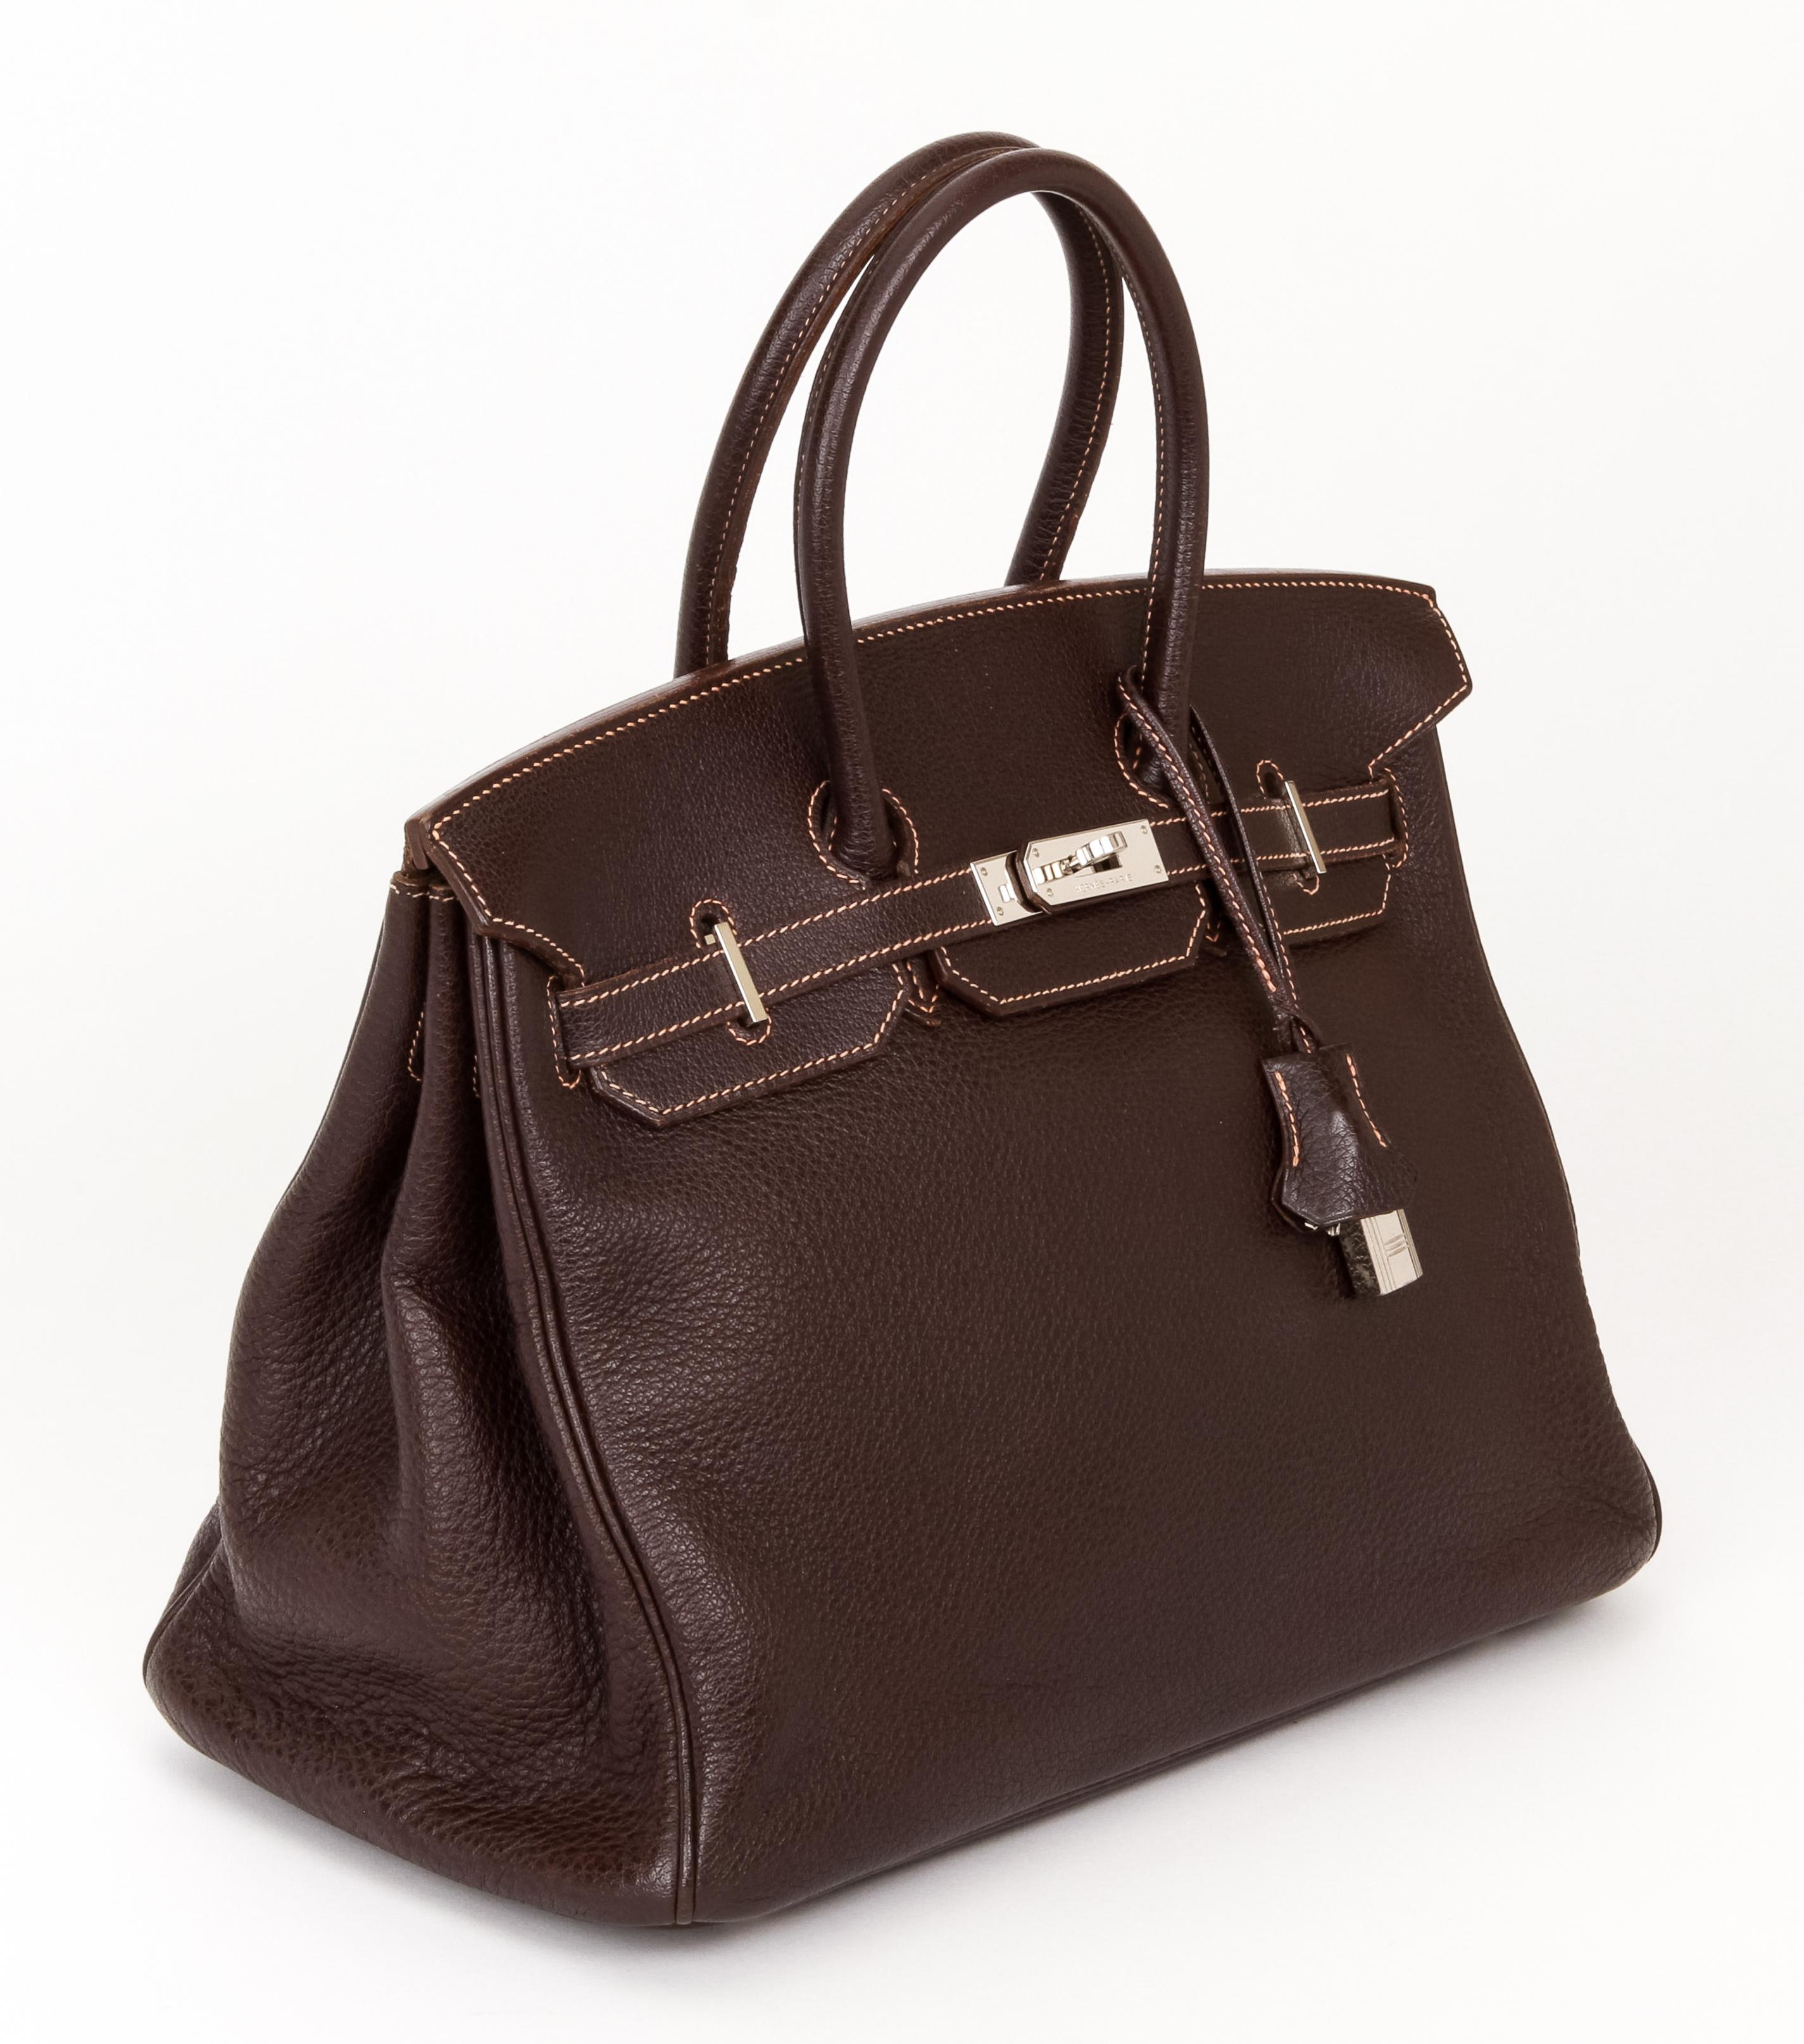 Hermès Birkin 35 cm in brown fjord leather, contrast stitching and palladium hardware. Handle drop, 4